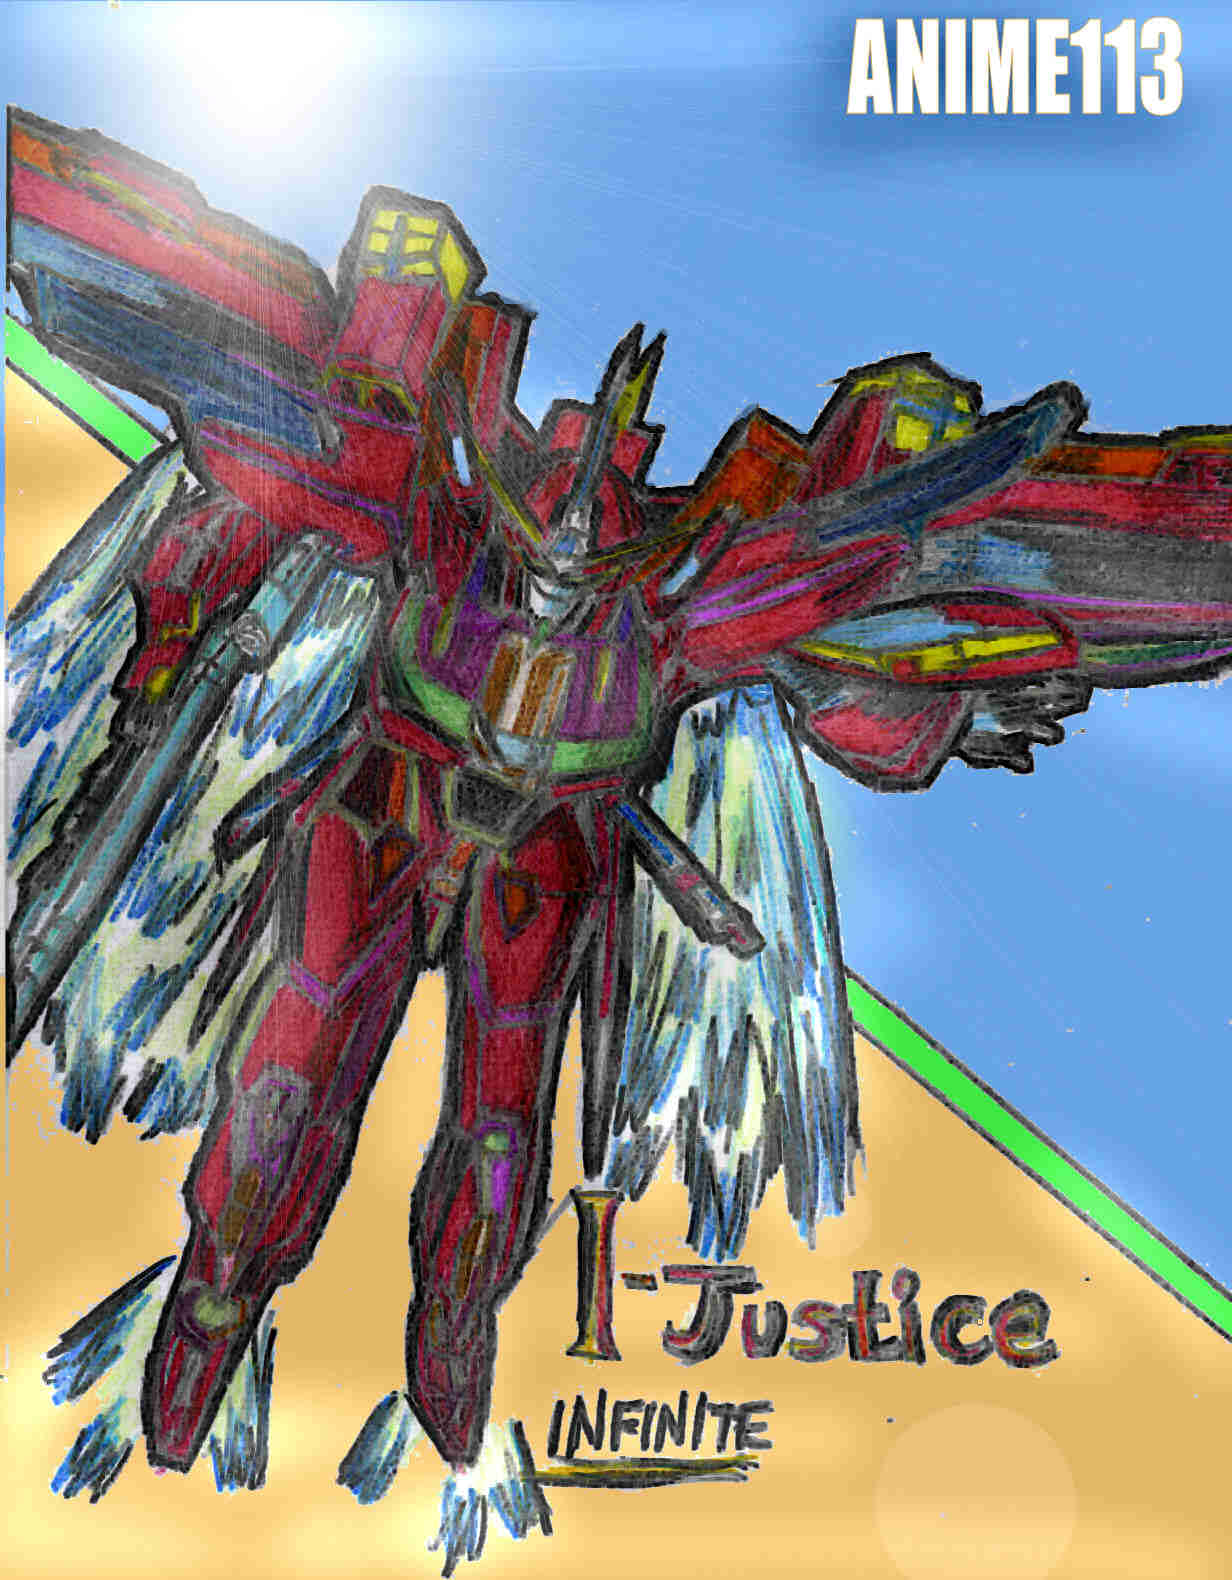 Infinite Justice (Gundam) by anime113